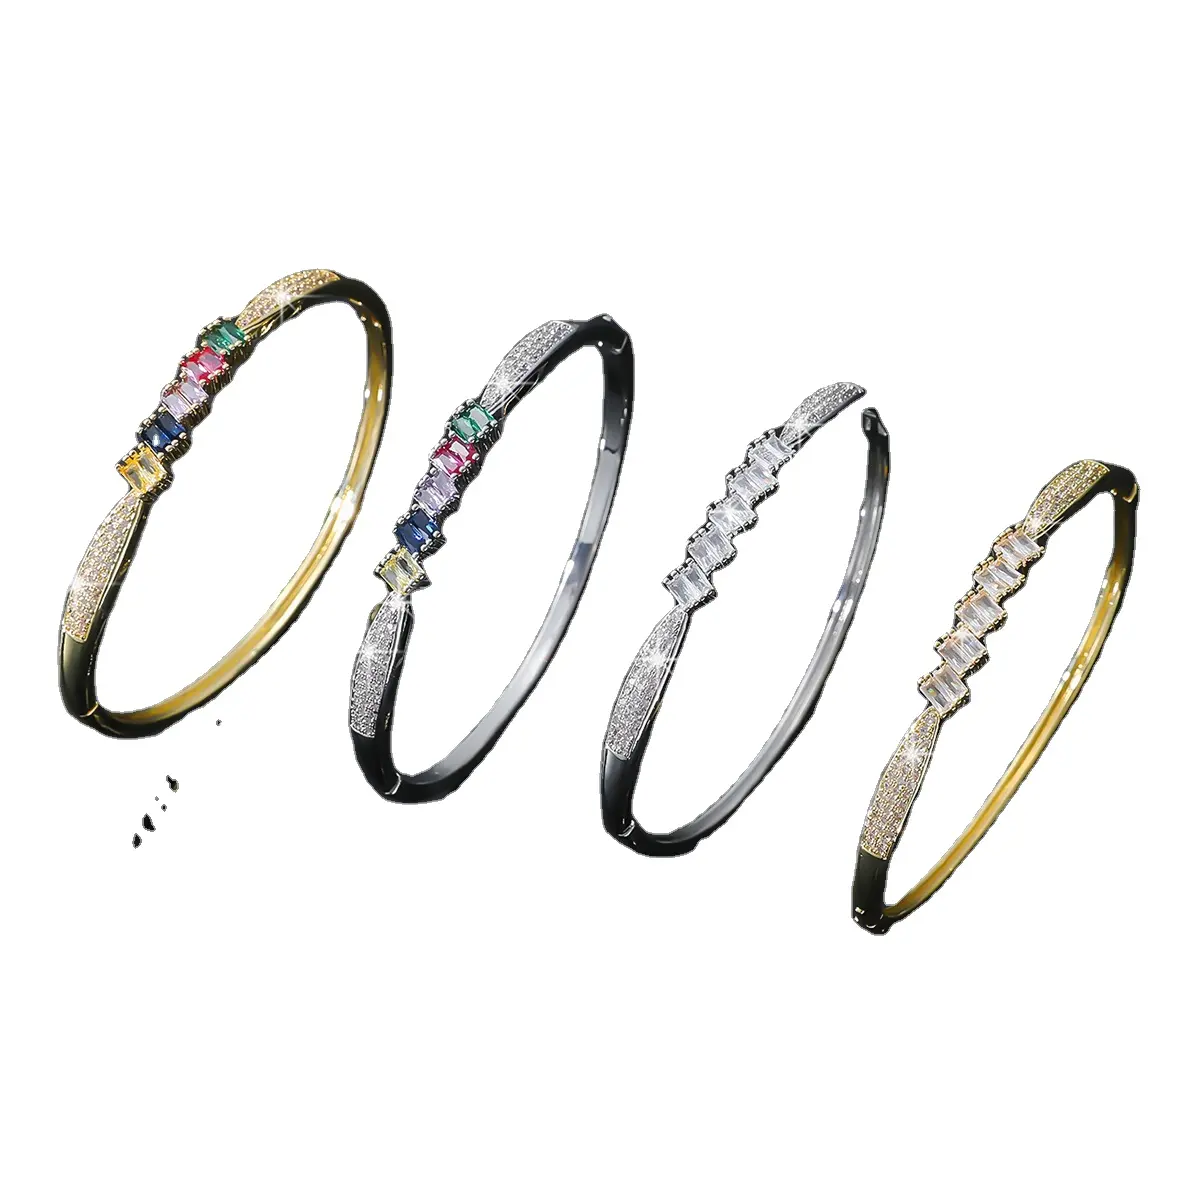 designer fashion jewelry bracelets & bangles bangkok earrings 18k gold plated bangles 18k gold bangle bracelet saudi ar